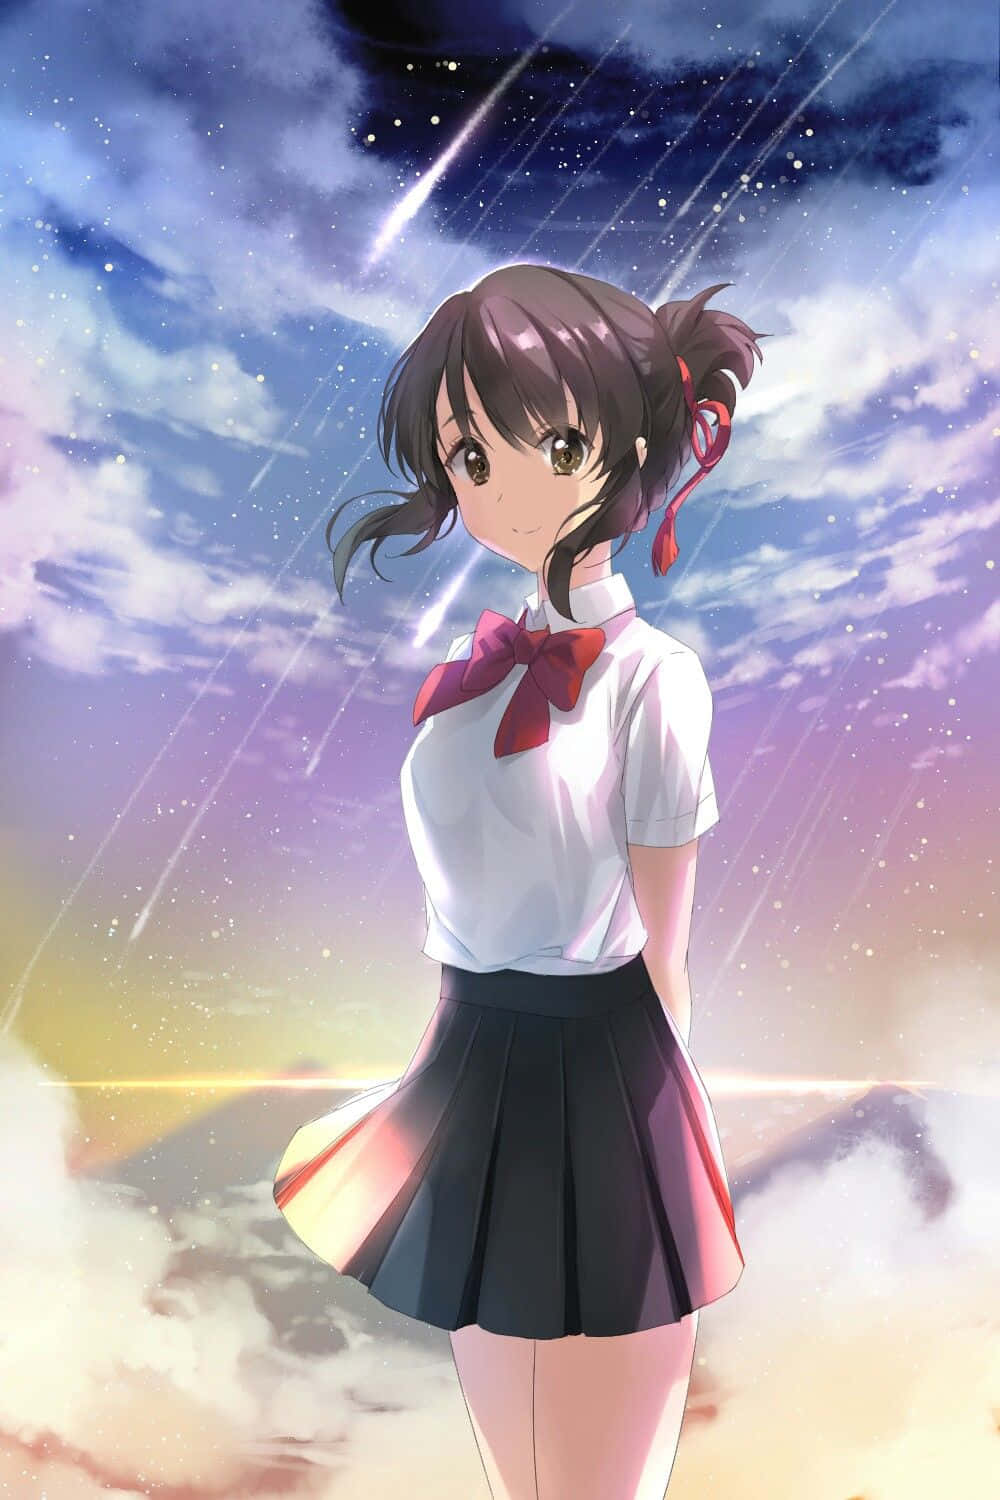 Kimi No Na Wa, Your Name, Japanese manga, anime characters, protagonists,  HD wallpaper